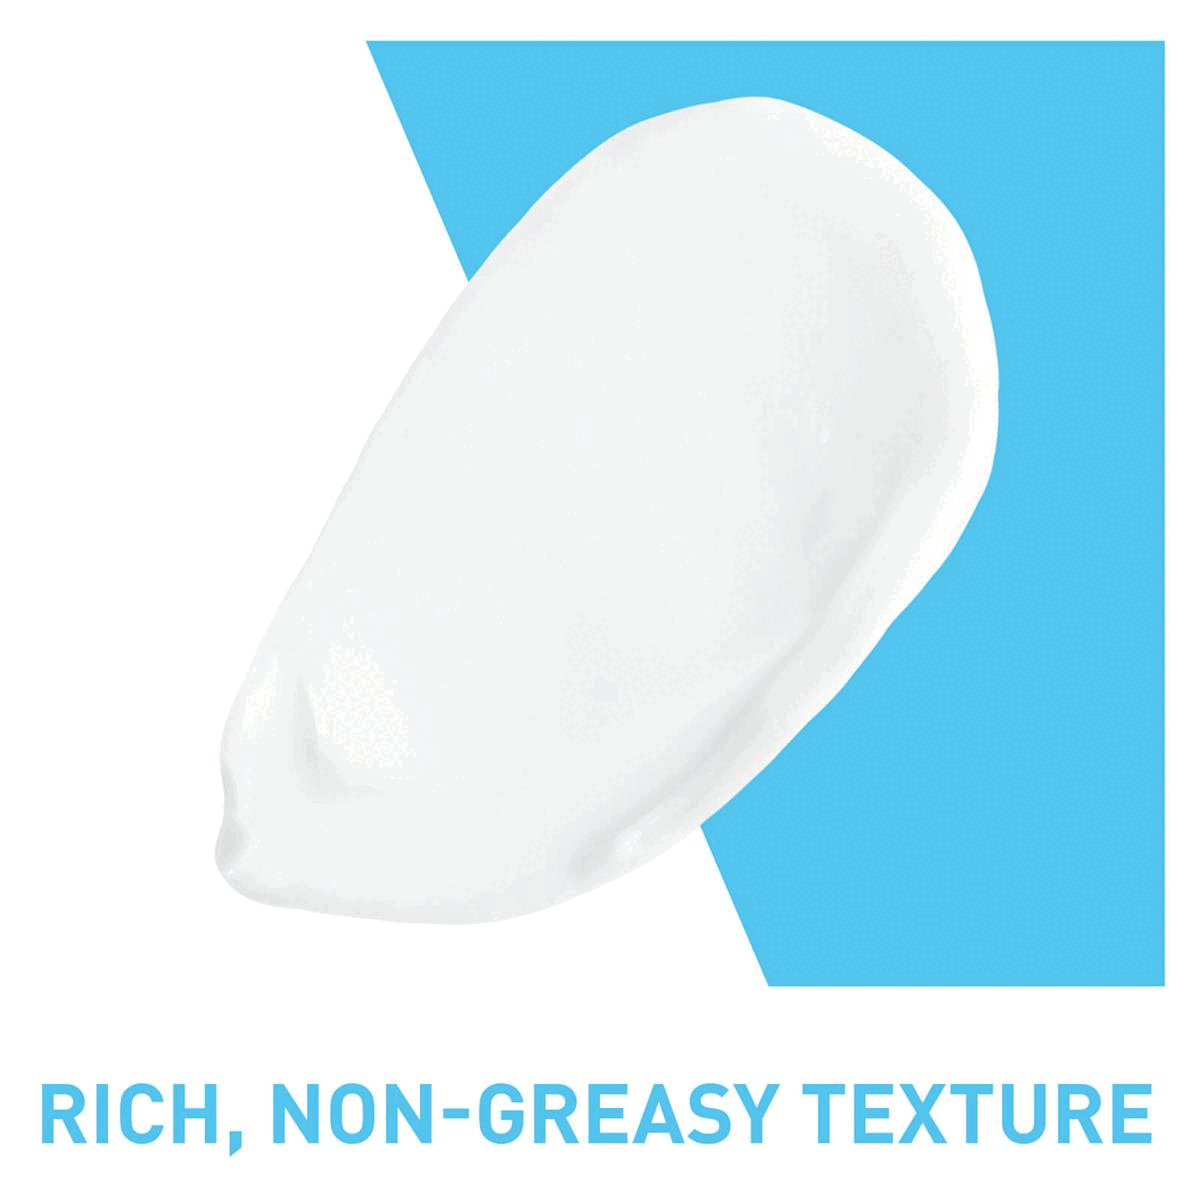 Image 1- rich, non-greasy texture Image 2- moisturizes and exfoliates